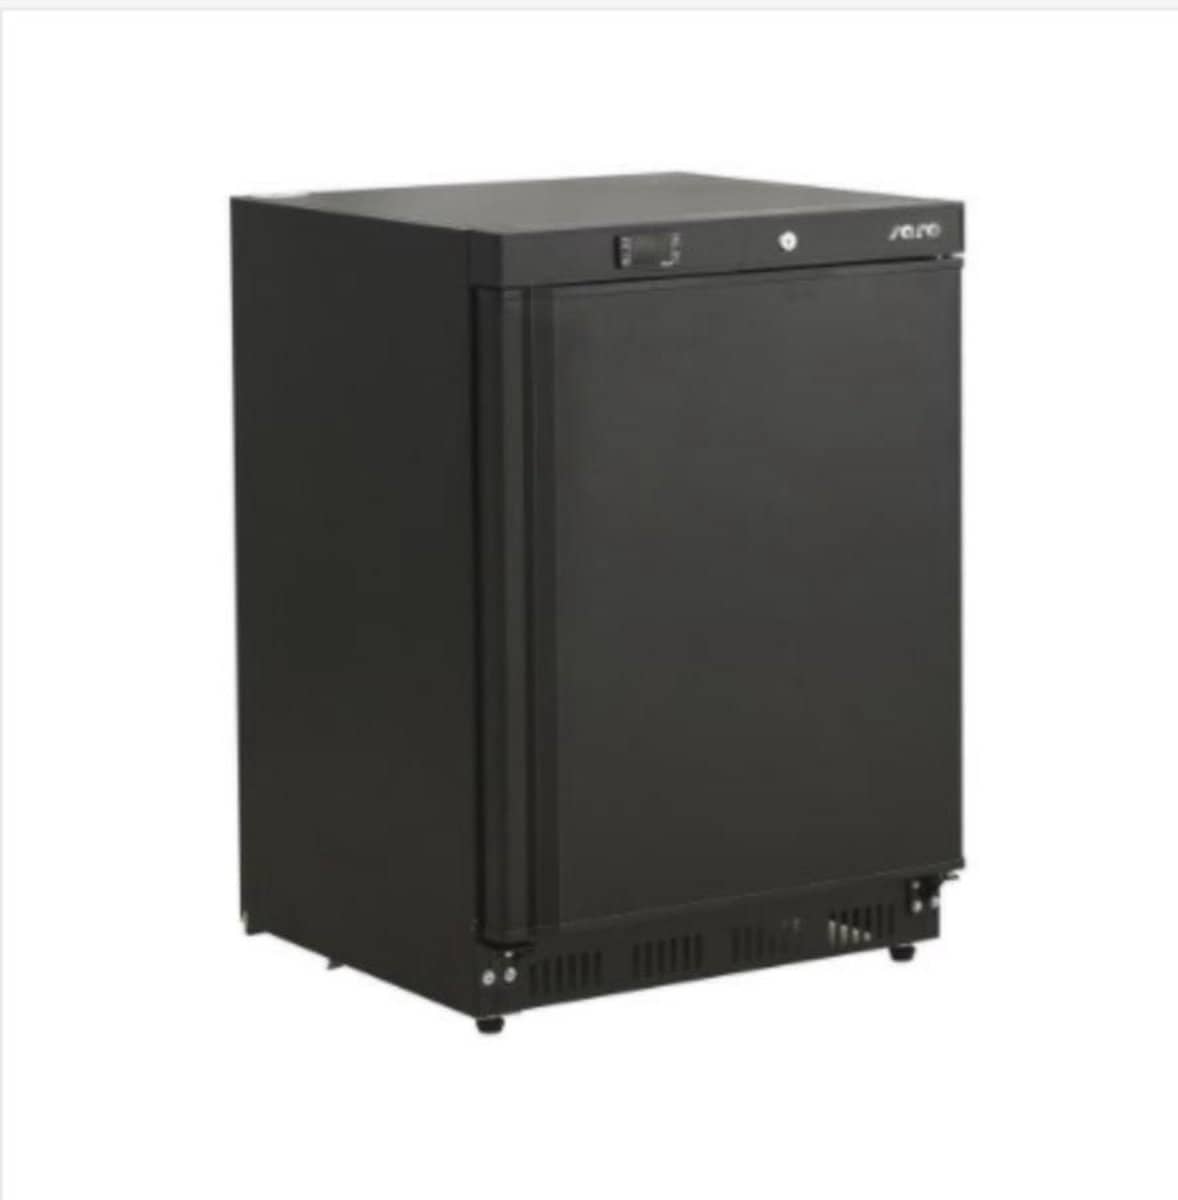 Saro koelkast | zwart design tafel model. Tafelmodel koelkast